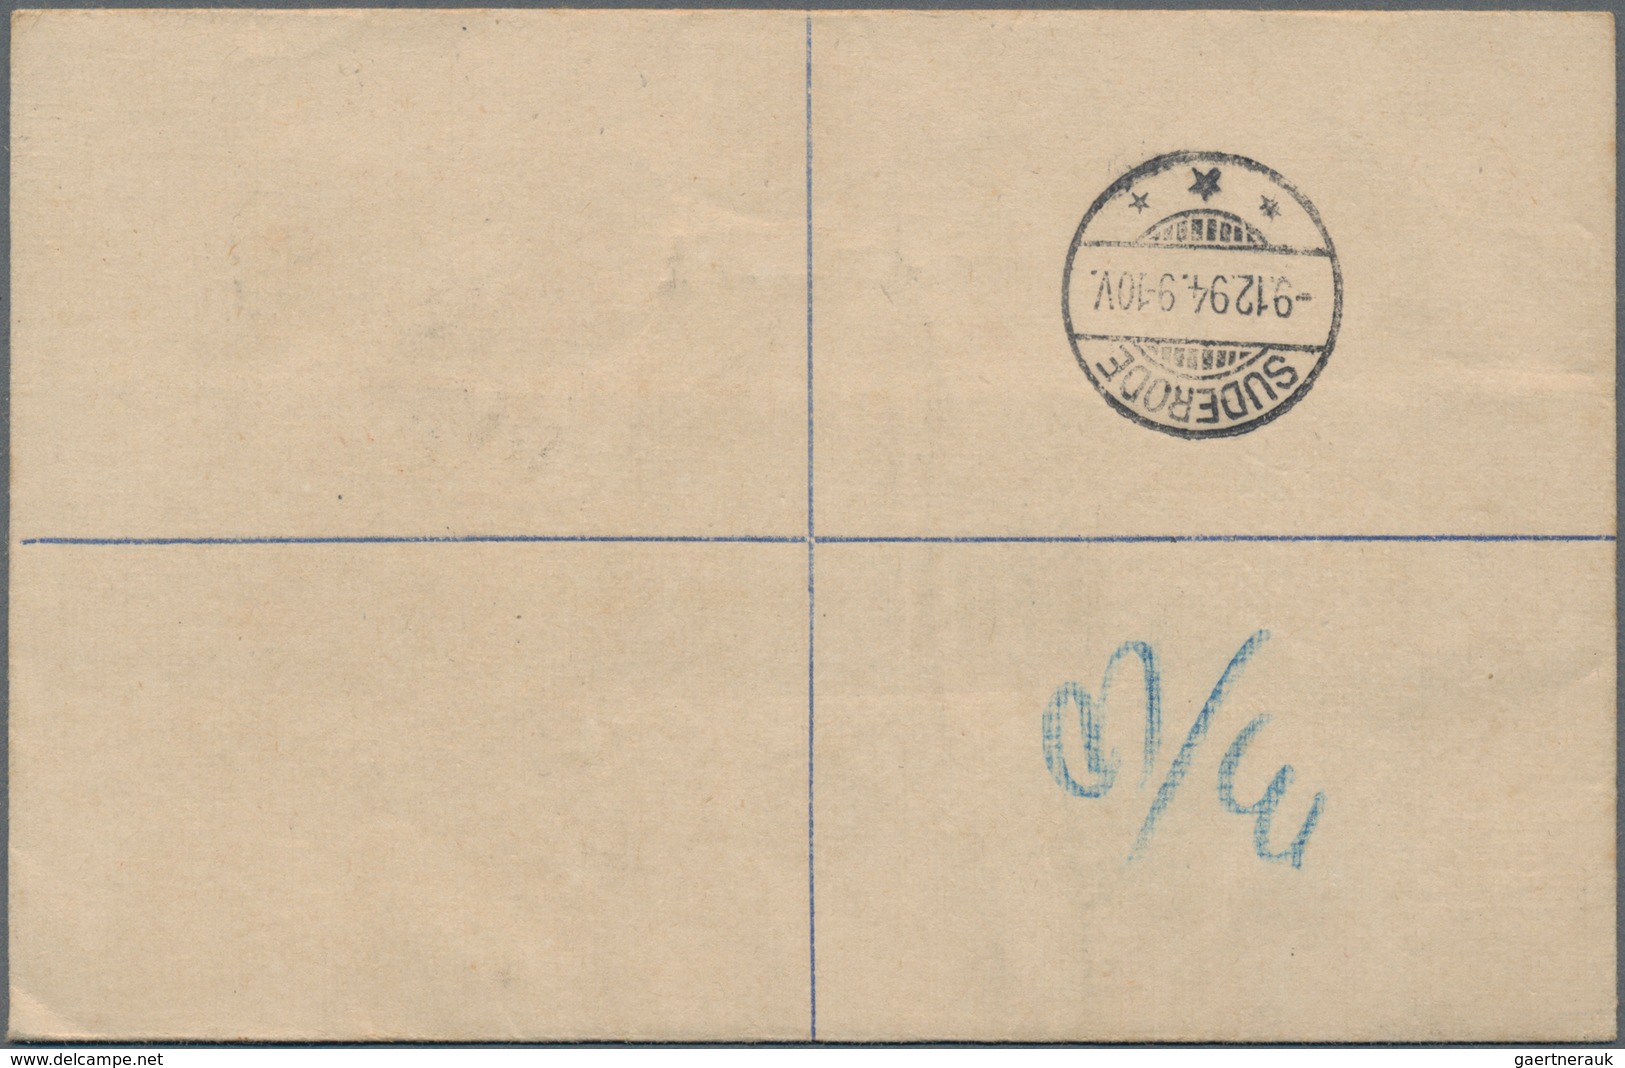 Goldküste: 1894 (16.11.), Registered Letter QV 2d. Ultramarine Uprated With QV 1d. Rose-carmine And - Gold Coast (...-1957)